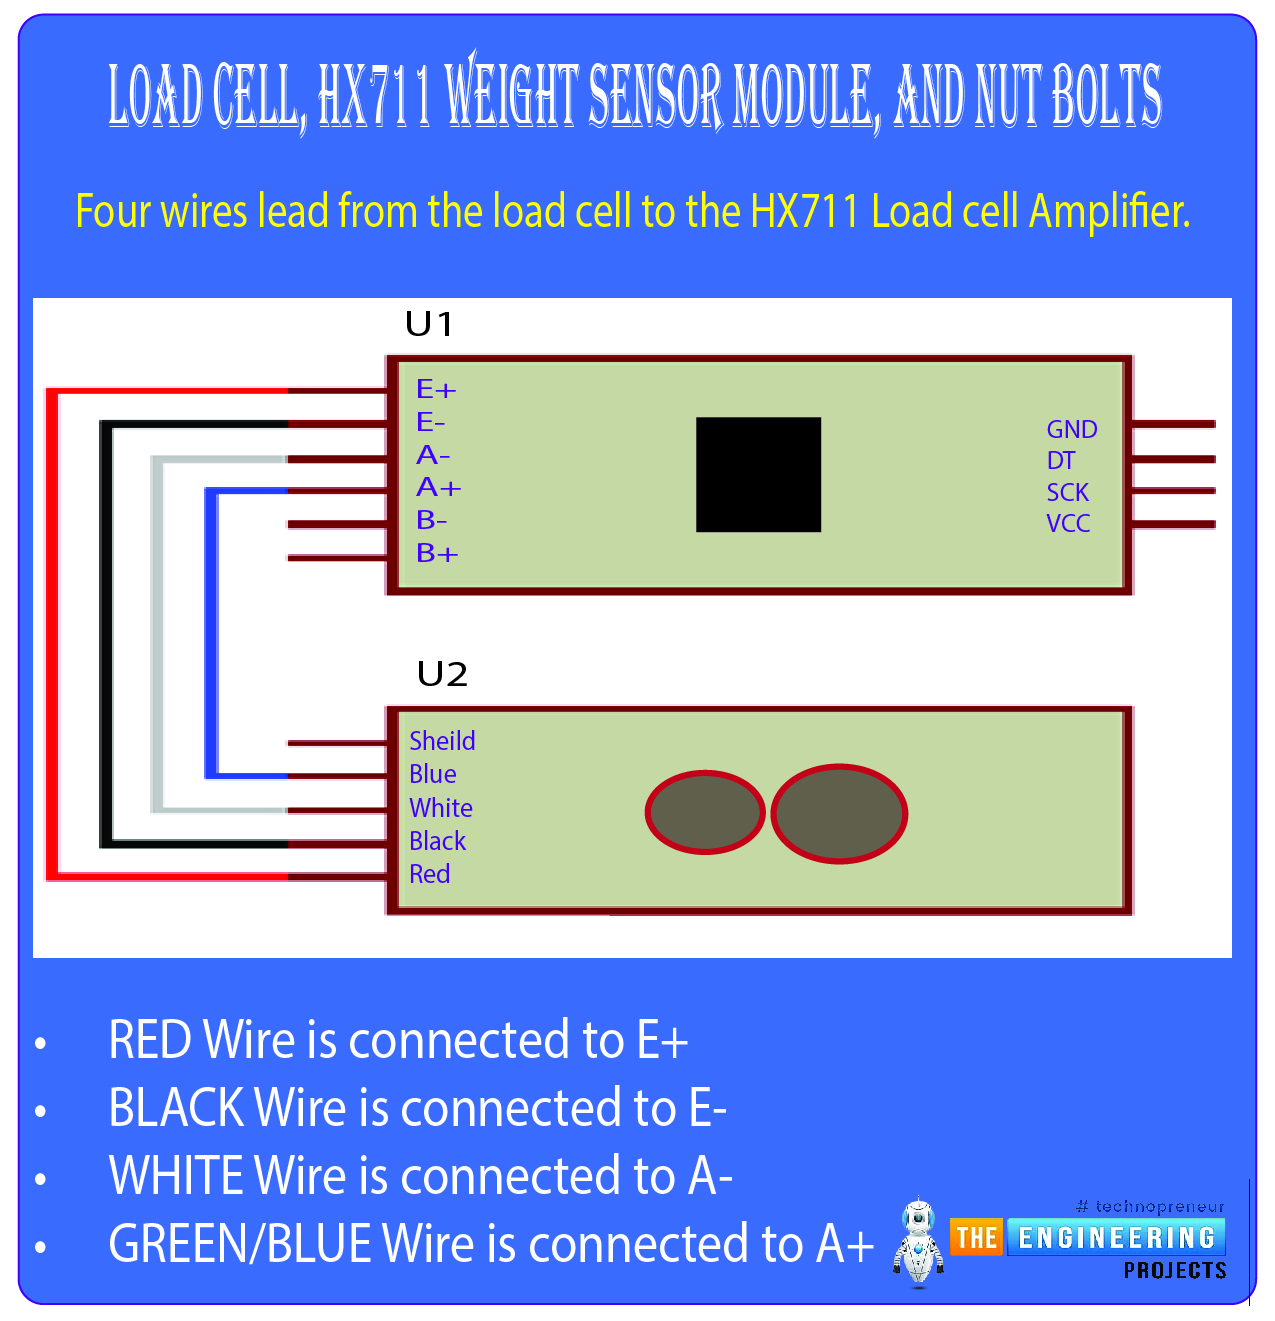 Interface weight sensor HX711 with raspberry pi 4, hx711 rpi4, rpi4 hx711, weight sensor with raspberry pi 4, raspberry pi 4 weight sensor